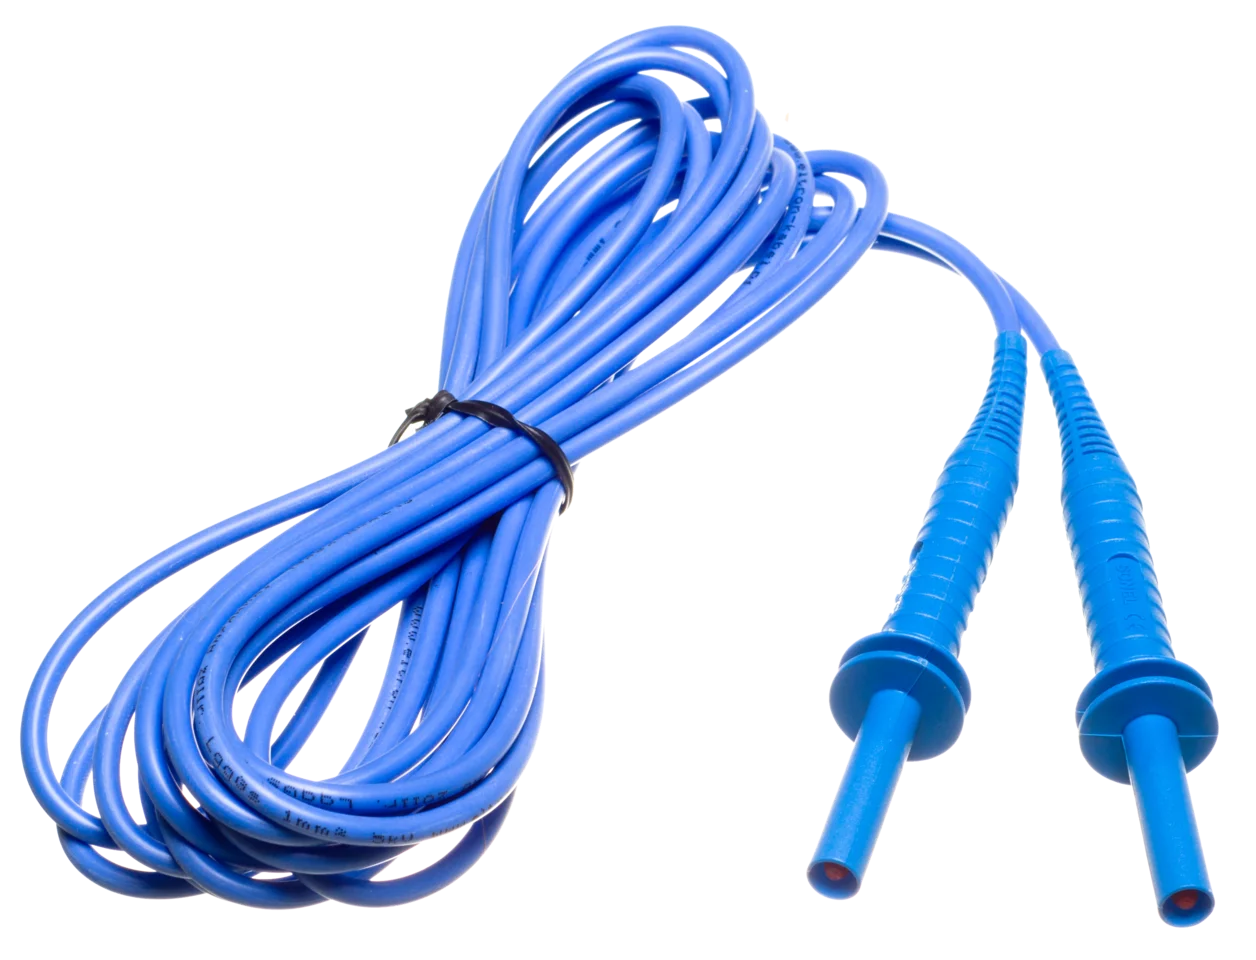 Test lead 5 m 5 kV (banana plugs) blue